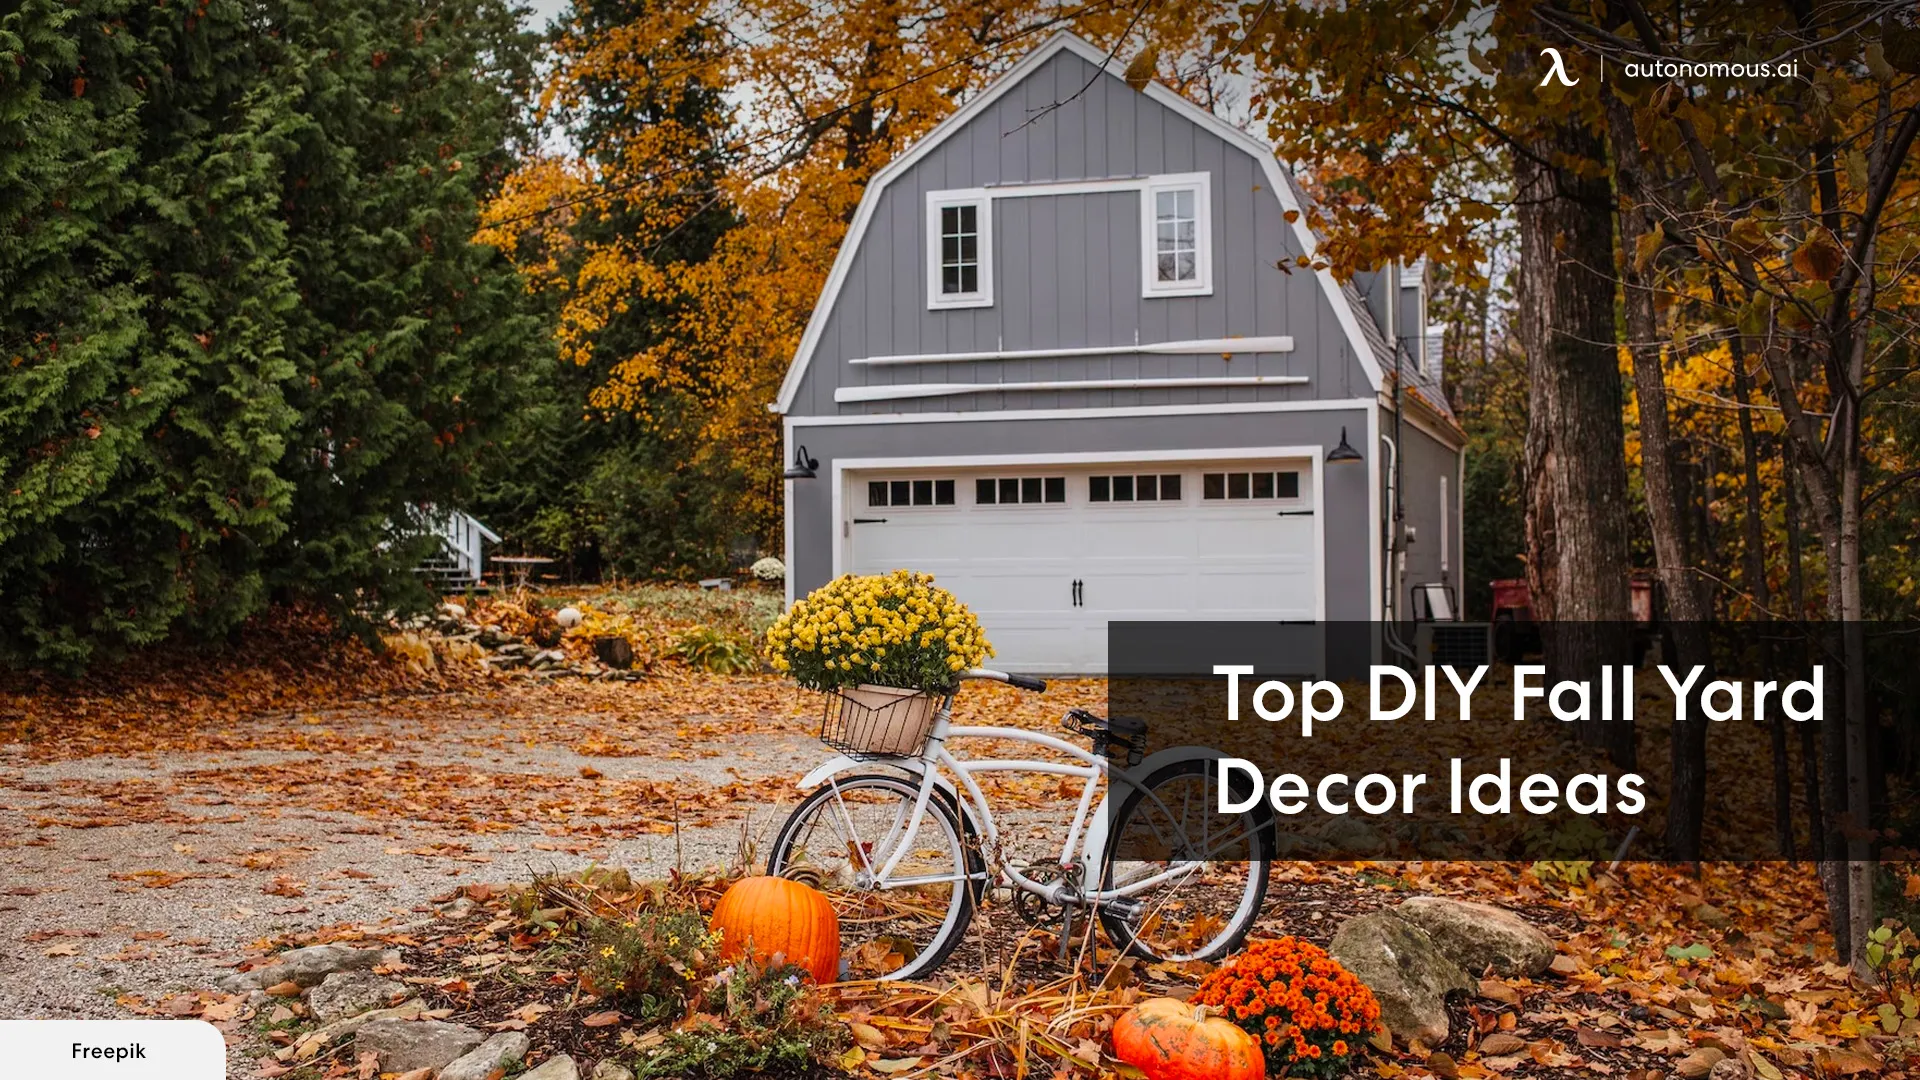 Inspiring Fall Yard Decor Ideas for the Autumn Season